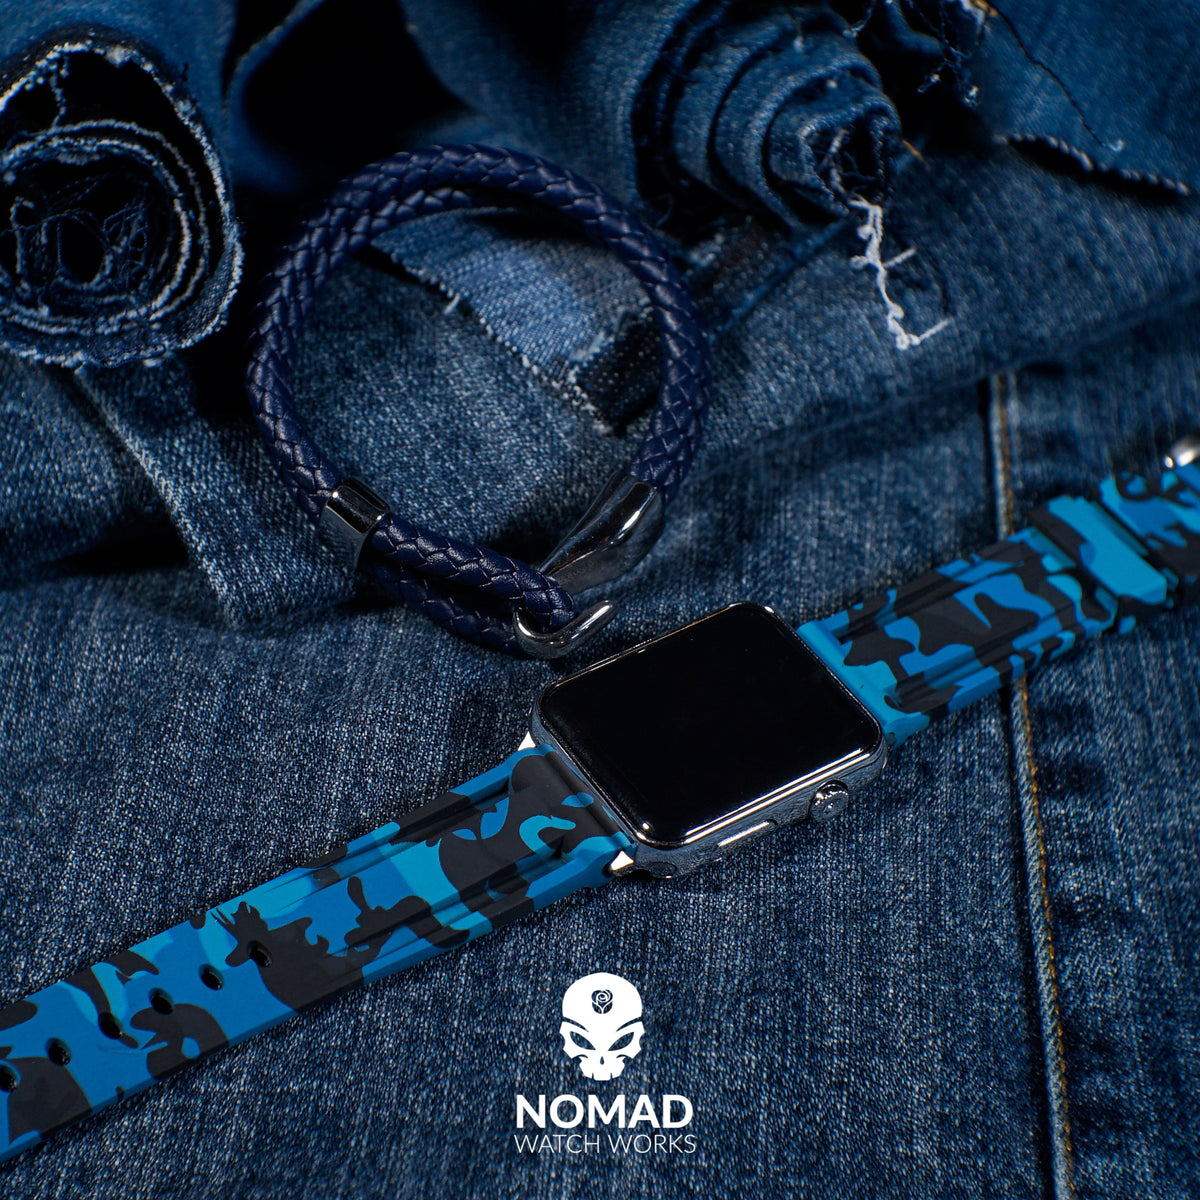 Oxford Leather Bracelet in Navy (Size L) - Nomad watch Works